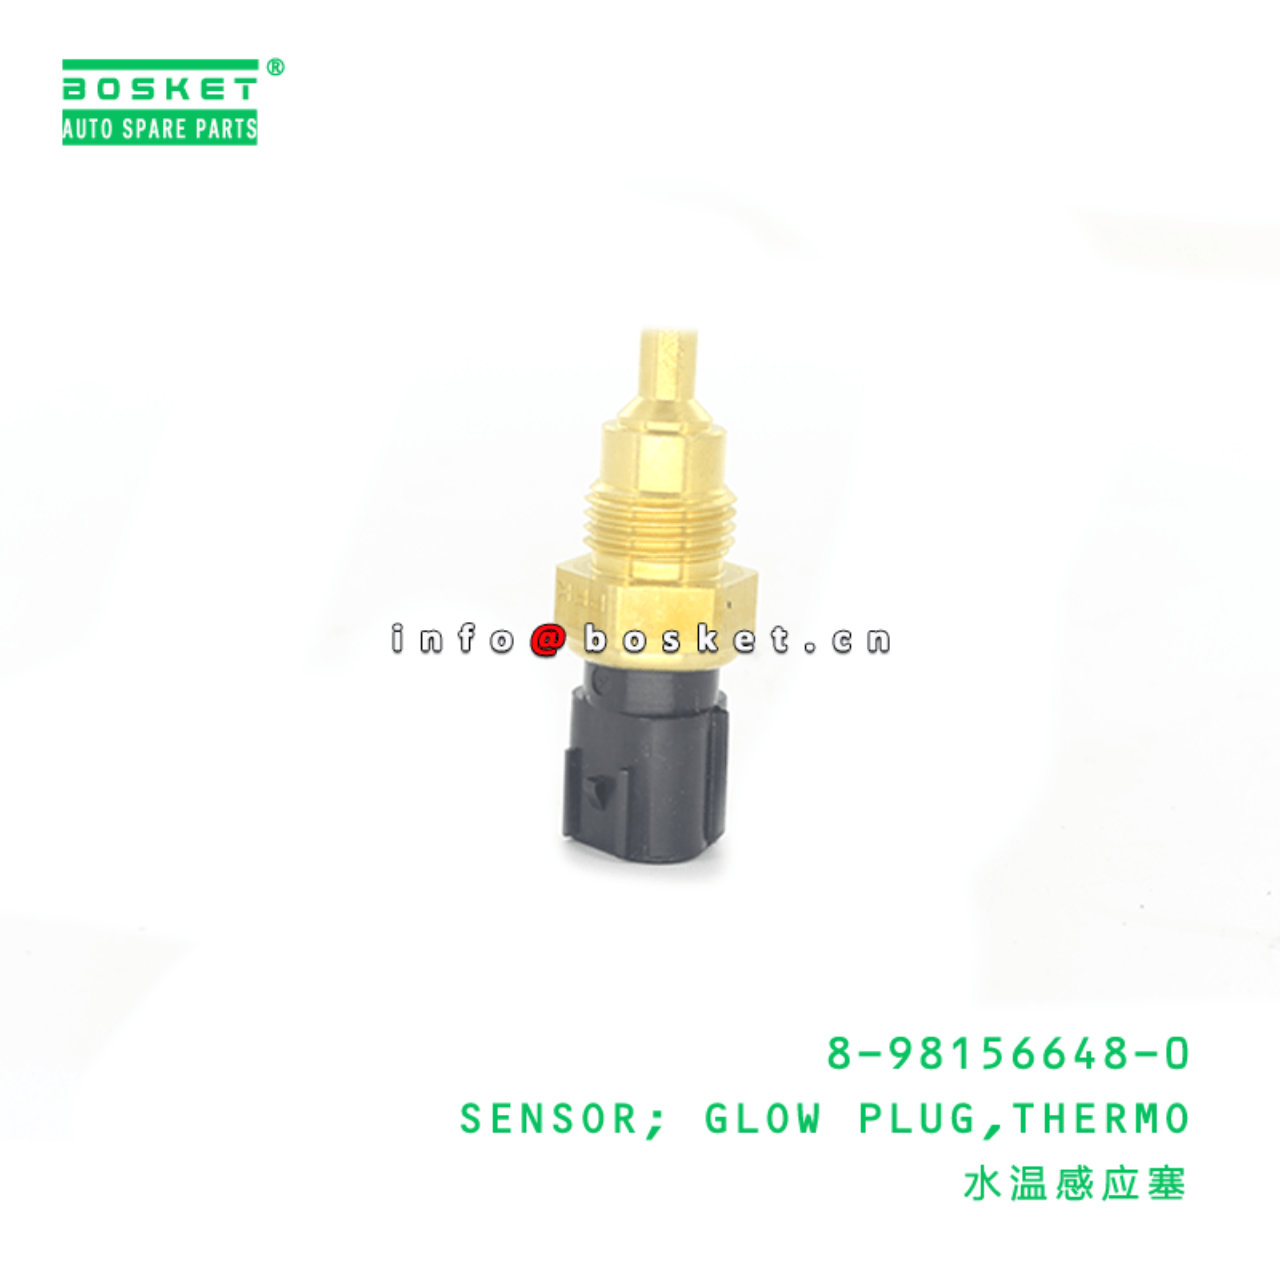 8-98156648-0 Thermometer Glow Plug Sensor 8981566480 Suitable for ISUZU NKR 4HK1